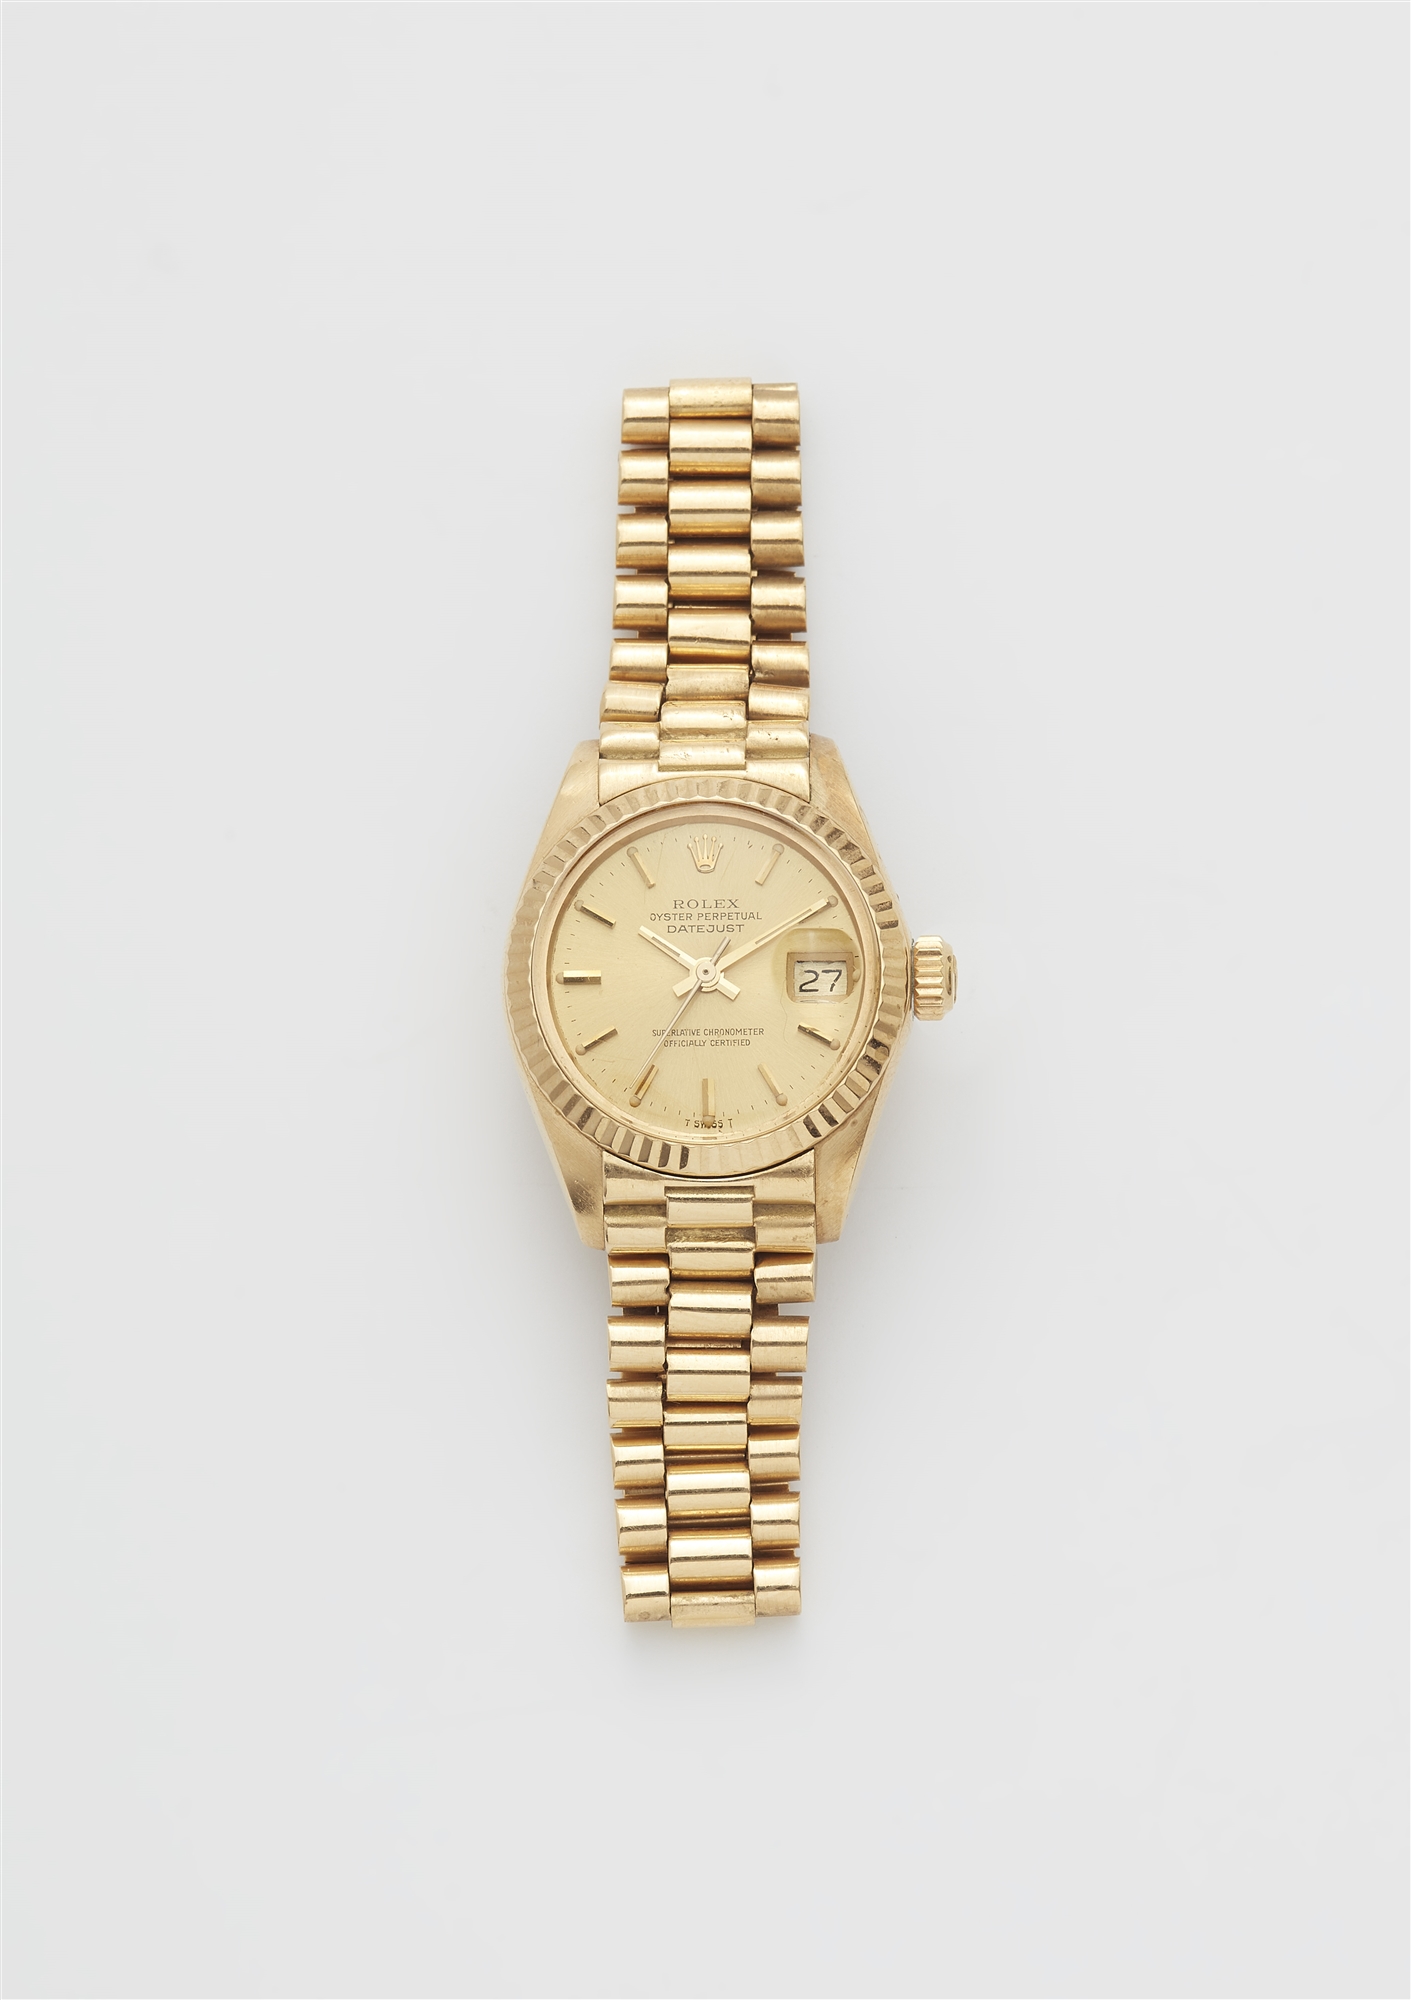 An 18k yellow gold automatic Rolex datejust ladies wristwatch.